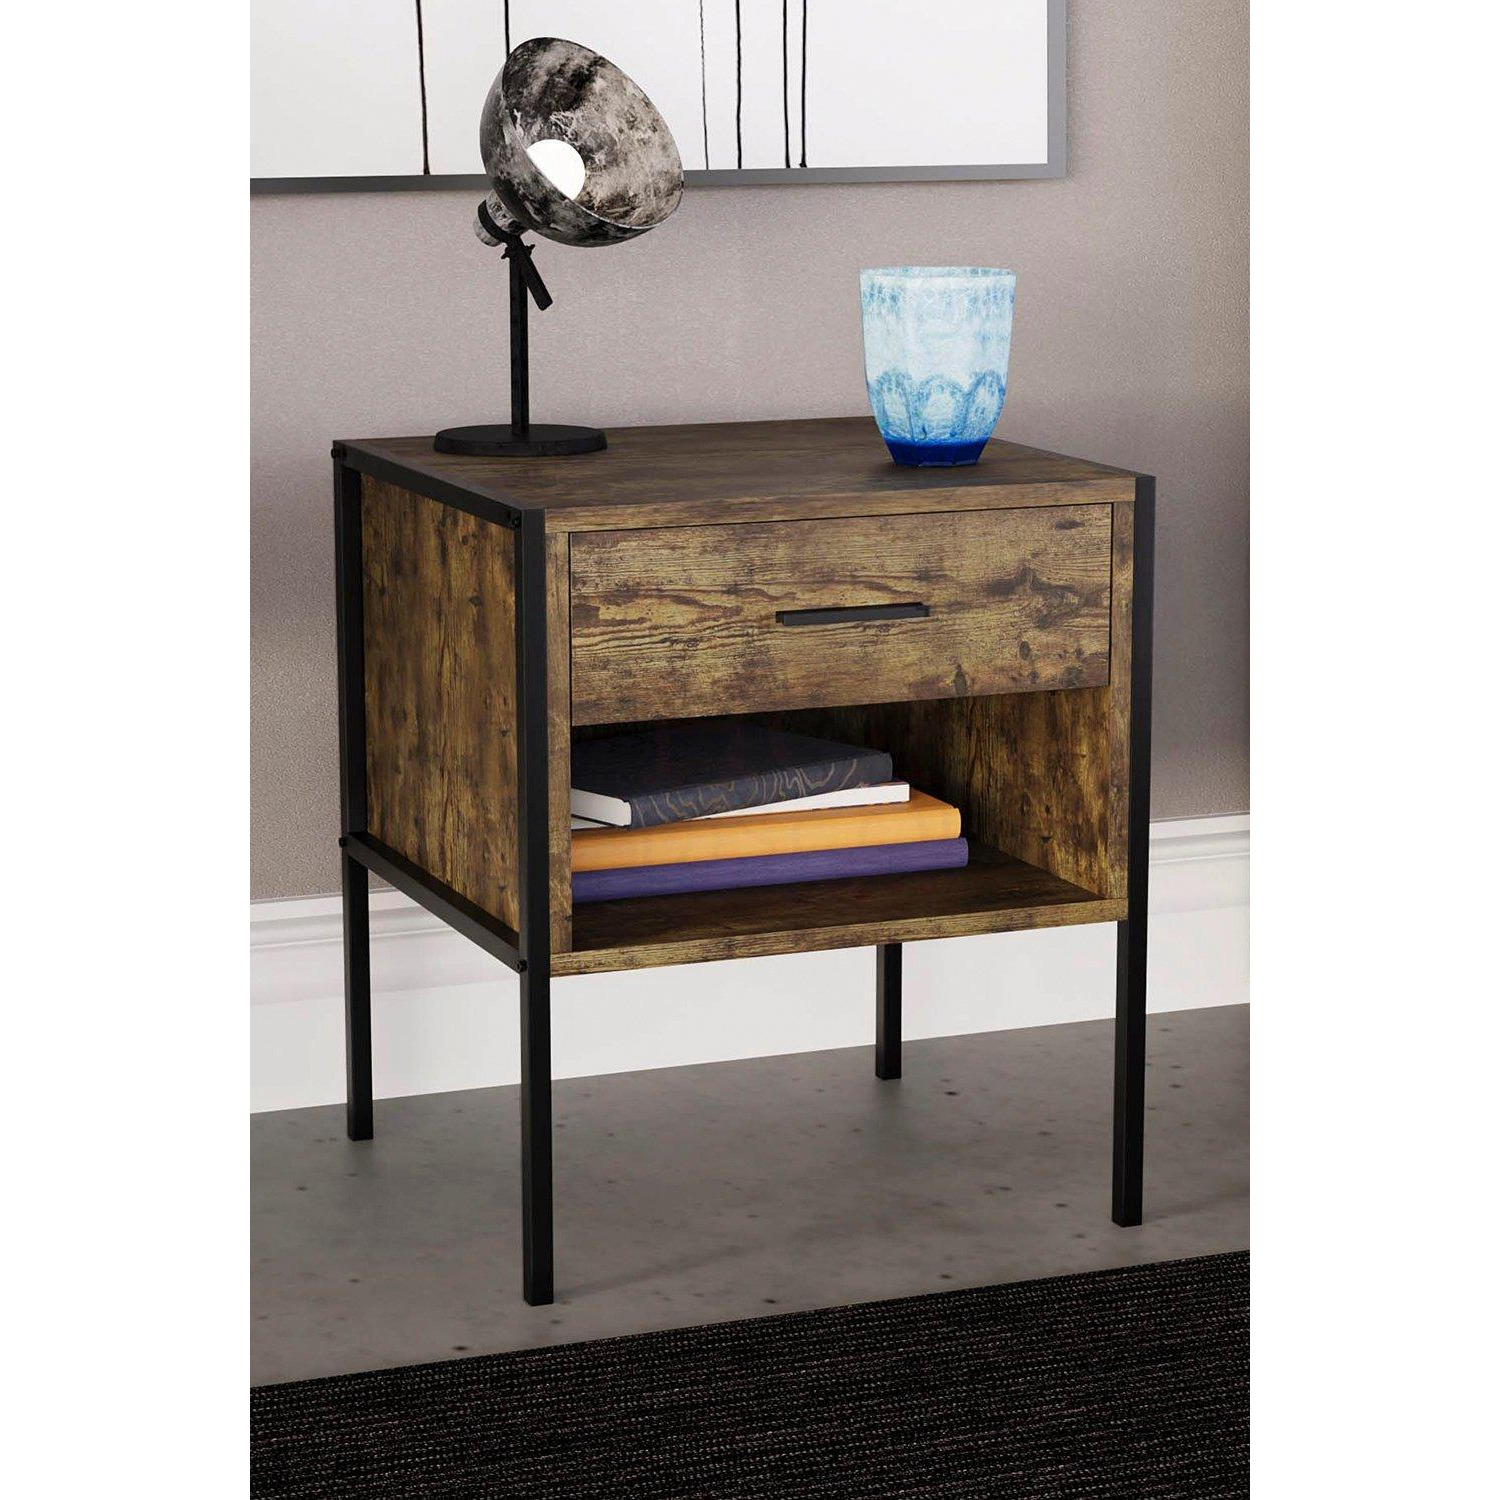 Vida Designs Brooklyn 1 Drawer Bedside Cabinet Chest Of Drawers Storage Bedroom Furniture - image 1